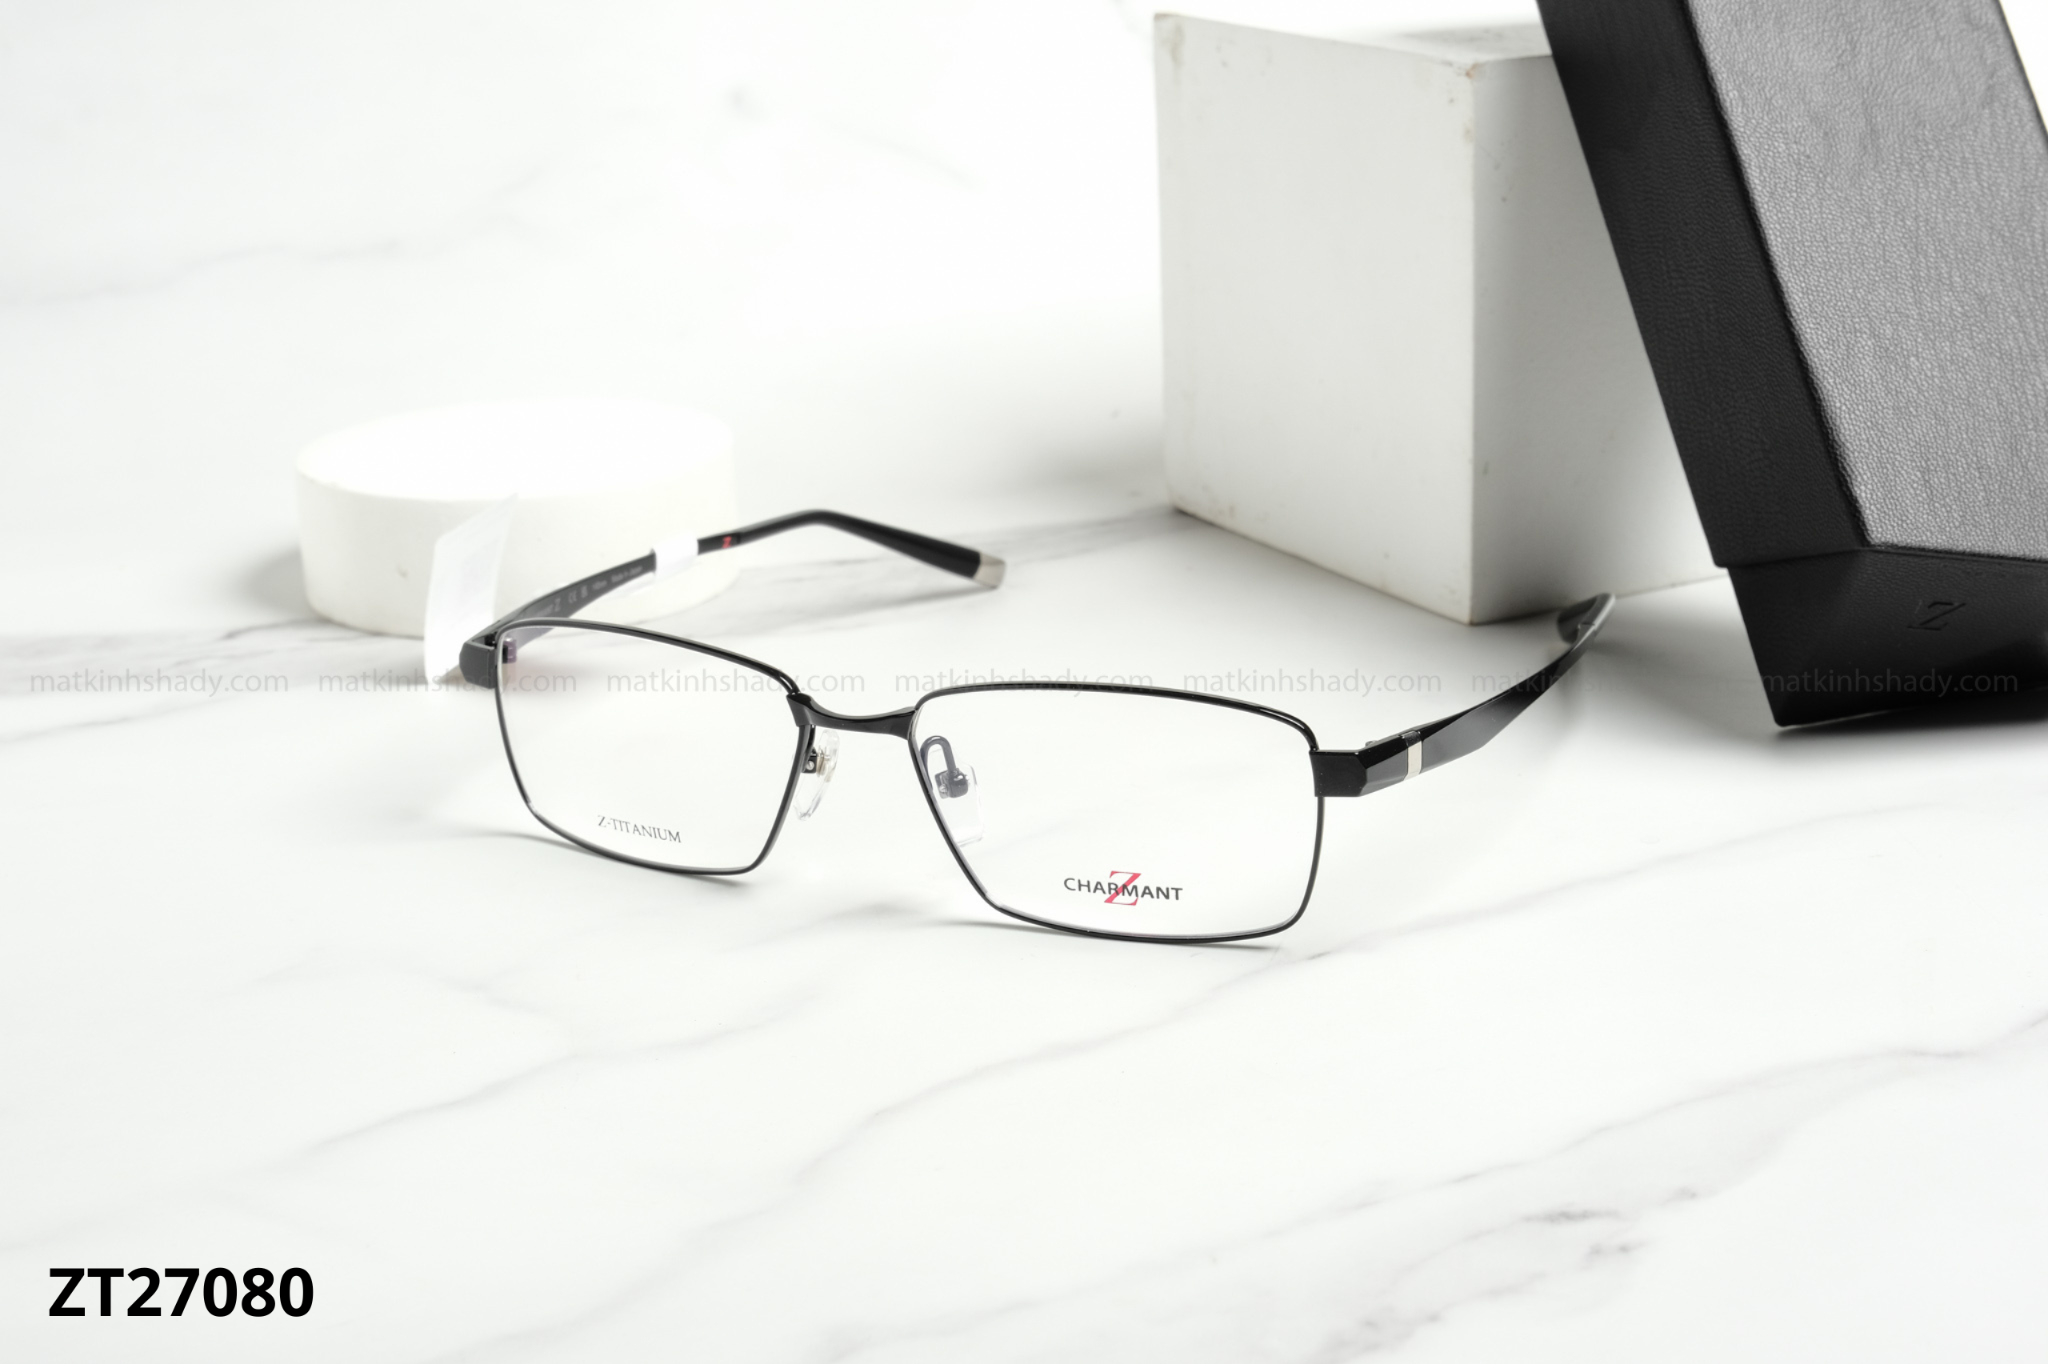  Charmant Z Eyewear - Glasses - ZT27080 